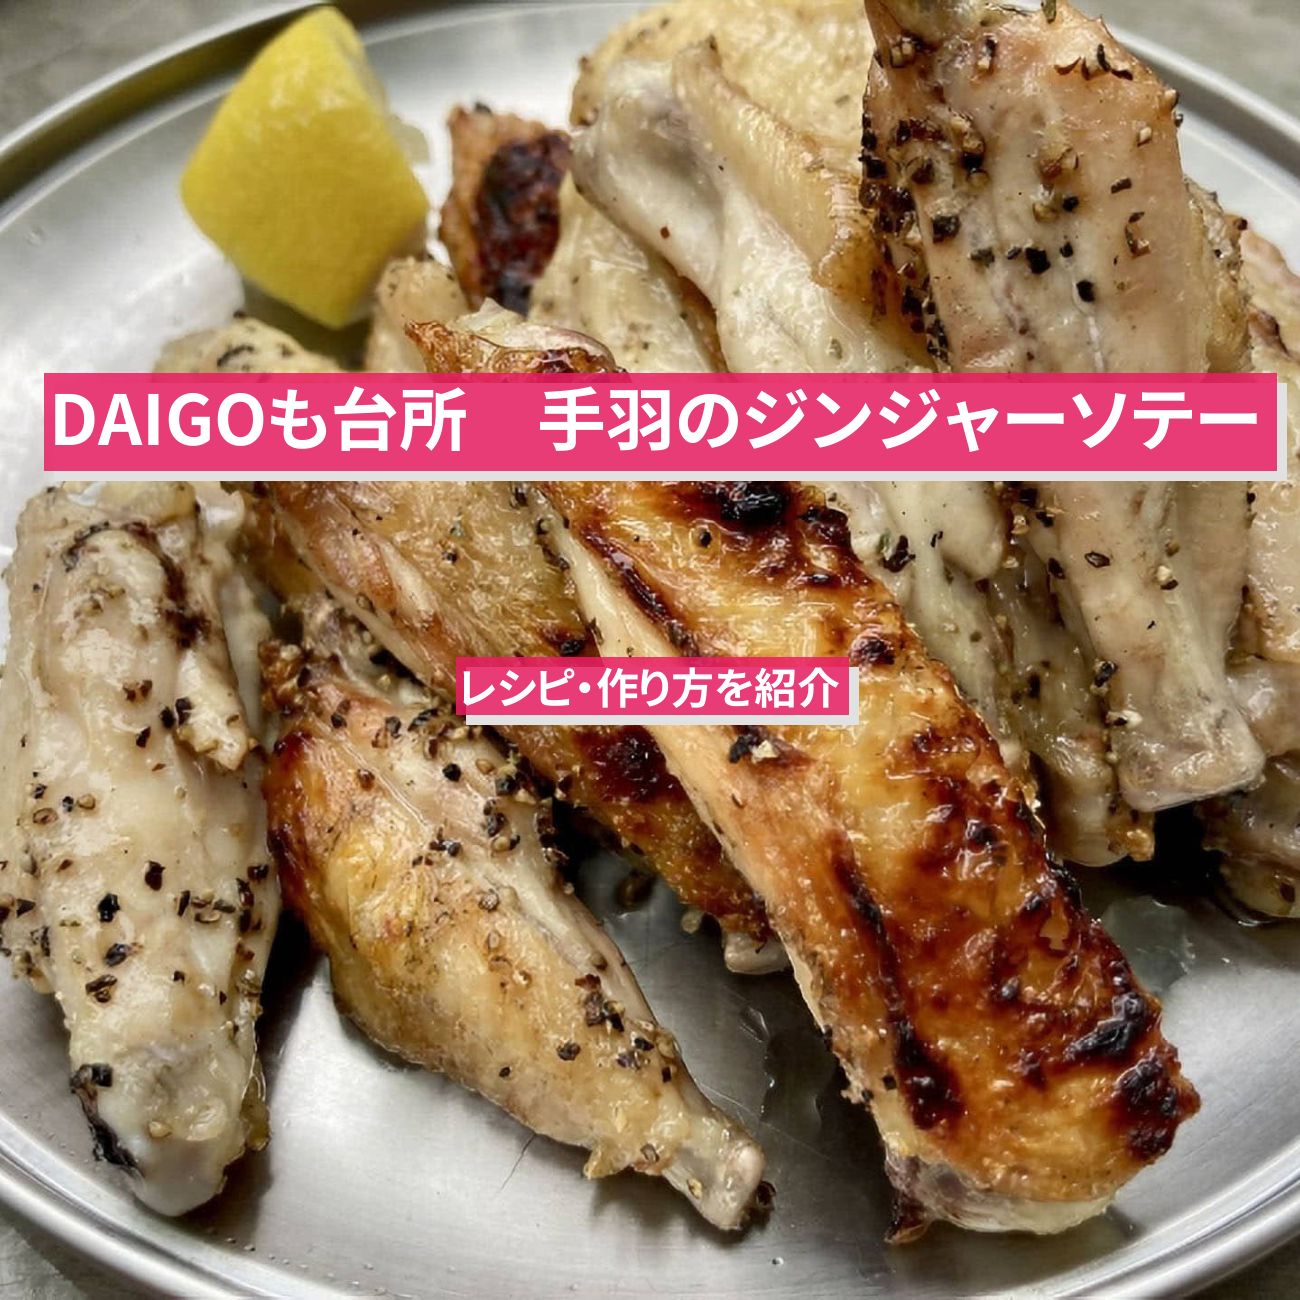 【DAIGOも台所】『手羽のジンジャーソテー』のレシピ・作り方を紹介〔ダイゴも台所〕